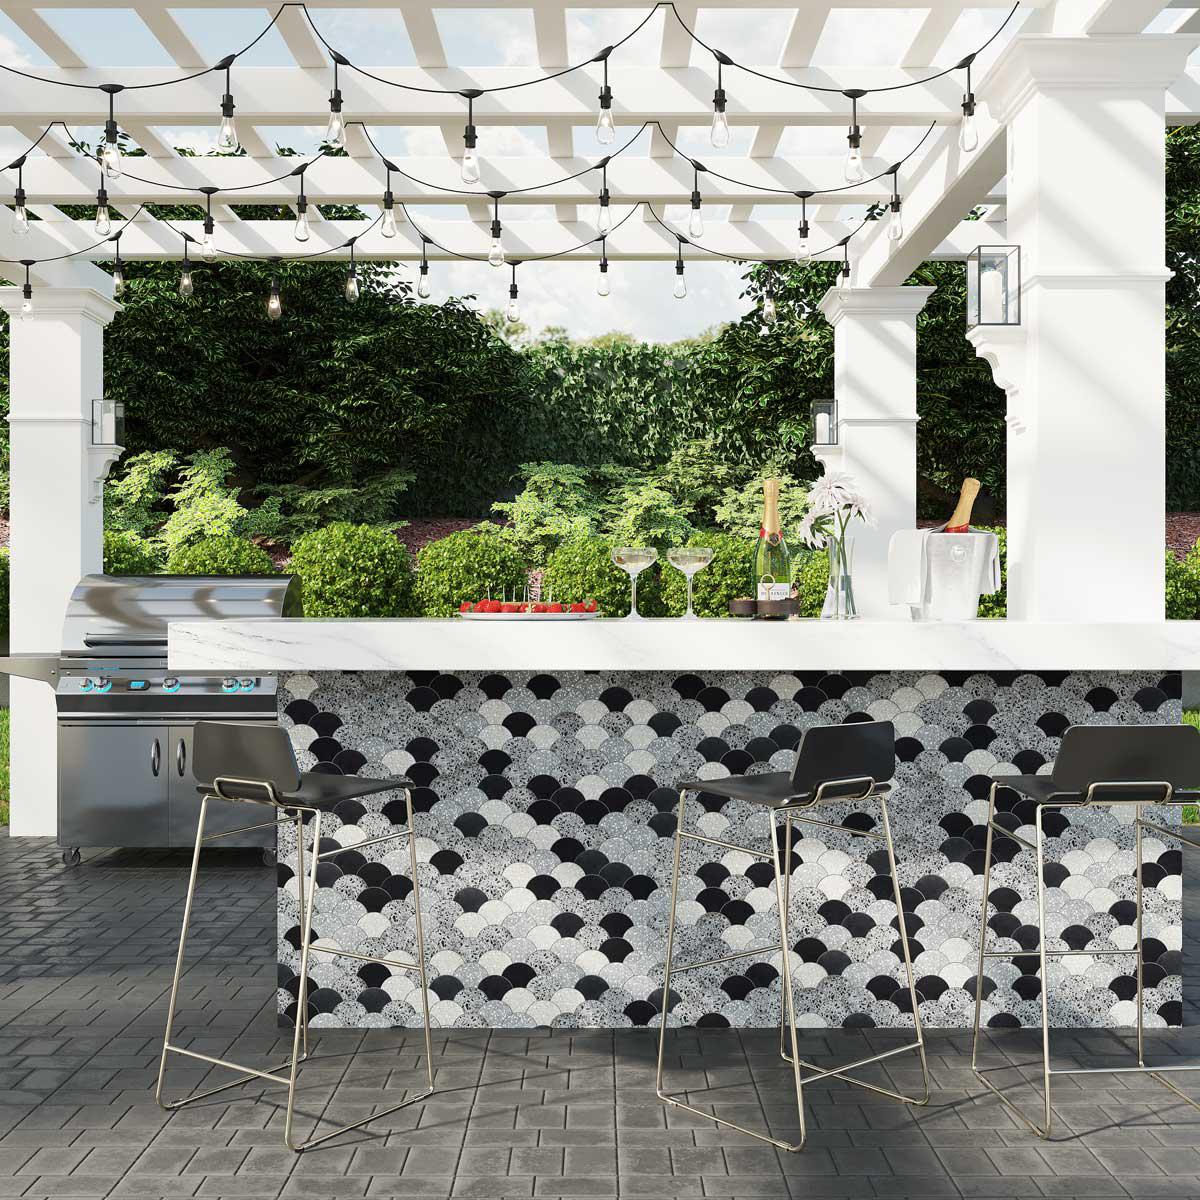 Outdoor patio bar with terrazzo fan tiles